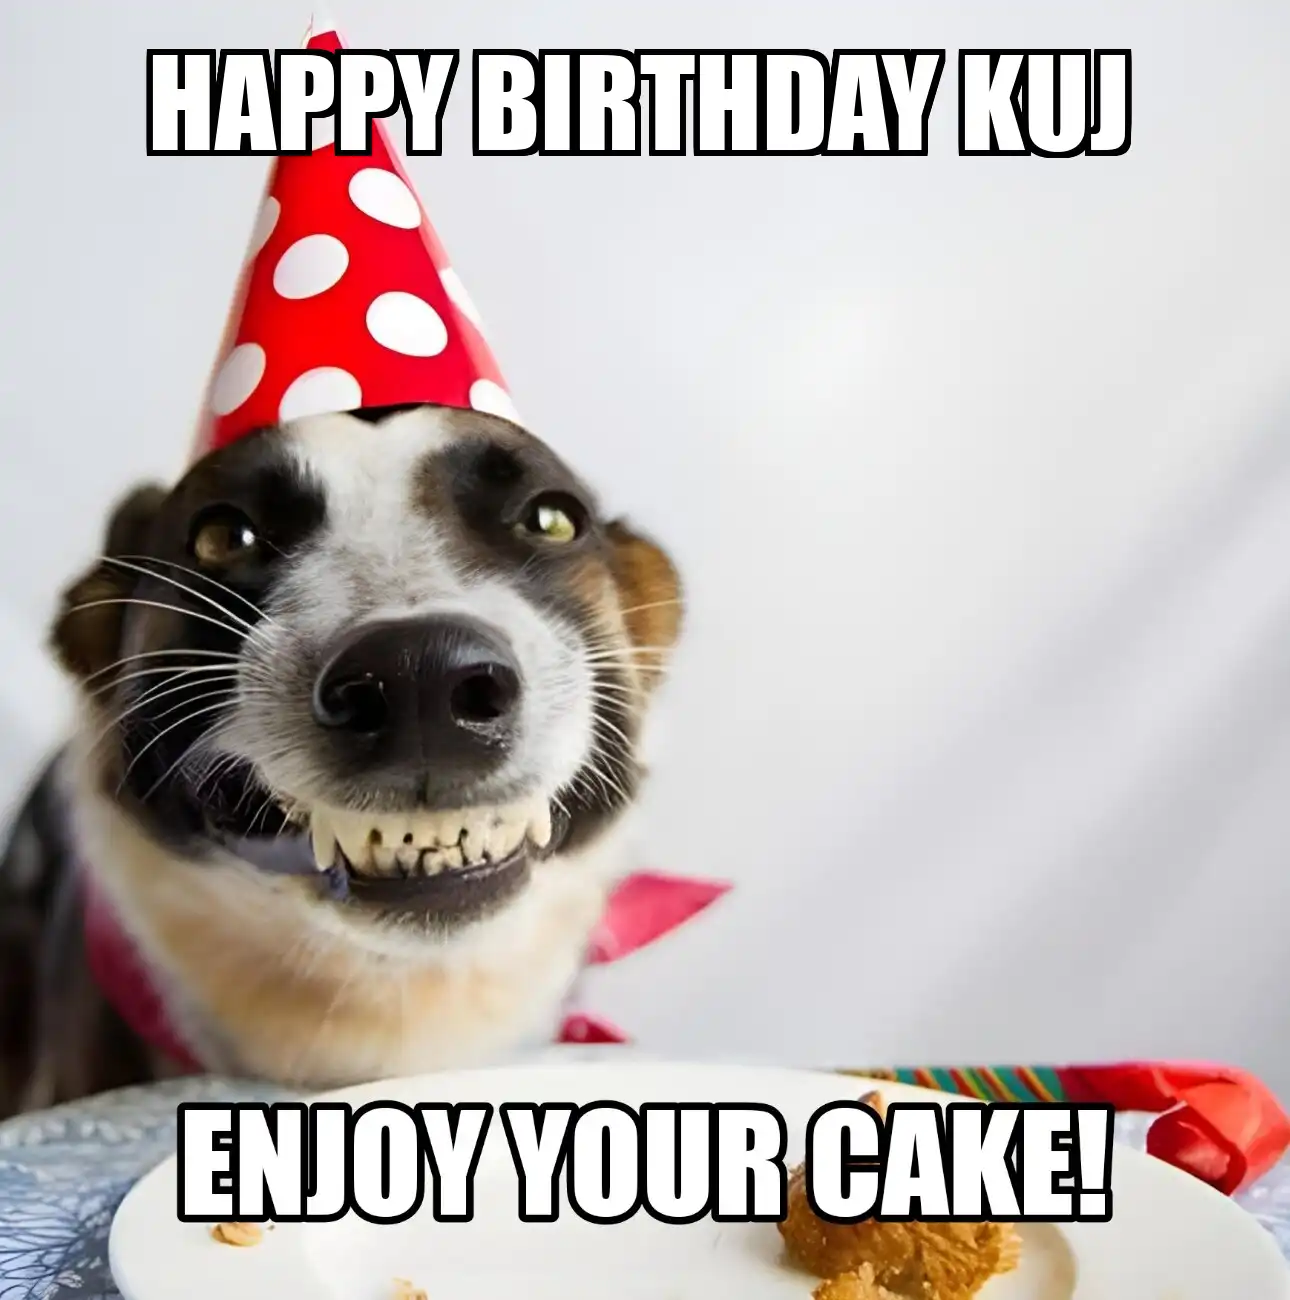 Happy Birthday Kuj Enjoy Your Cake Dog Meme